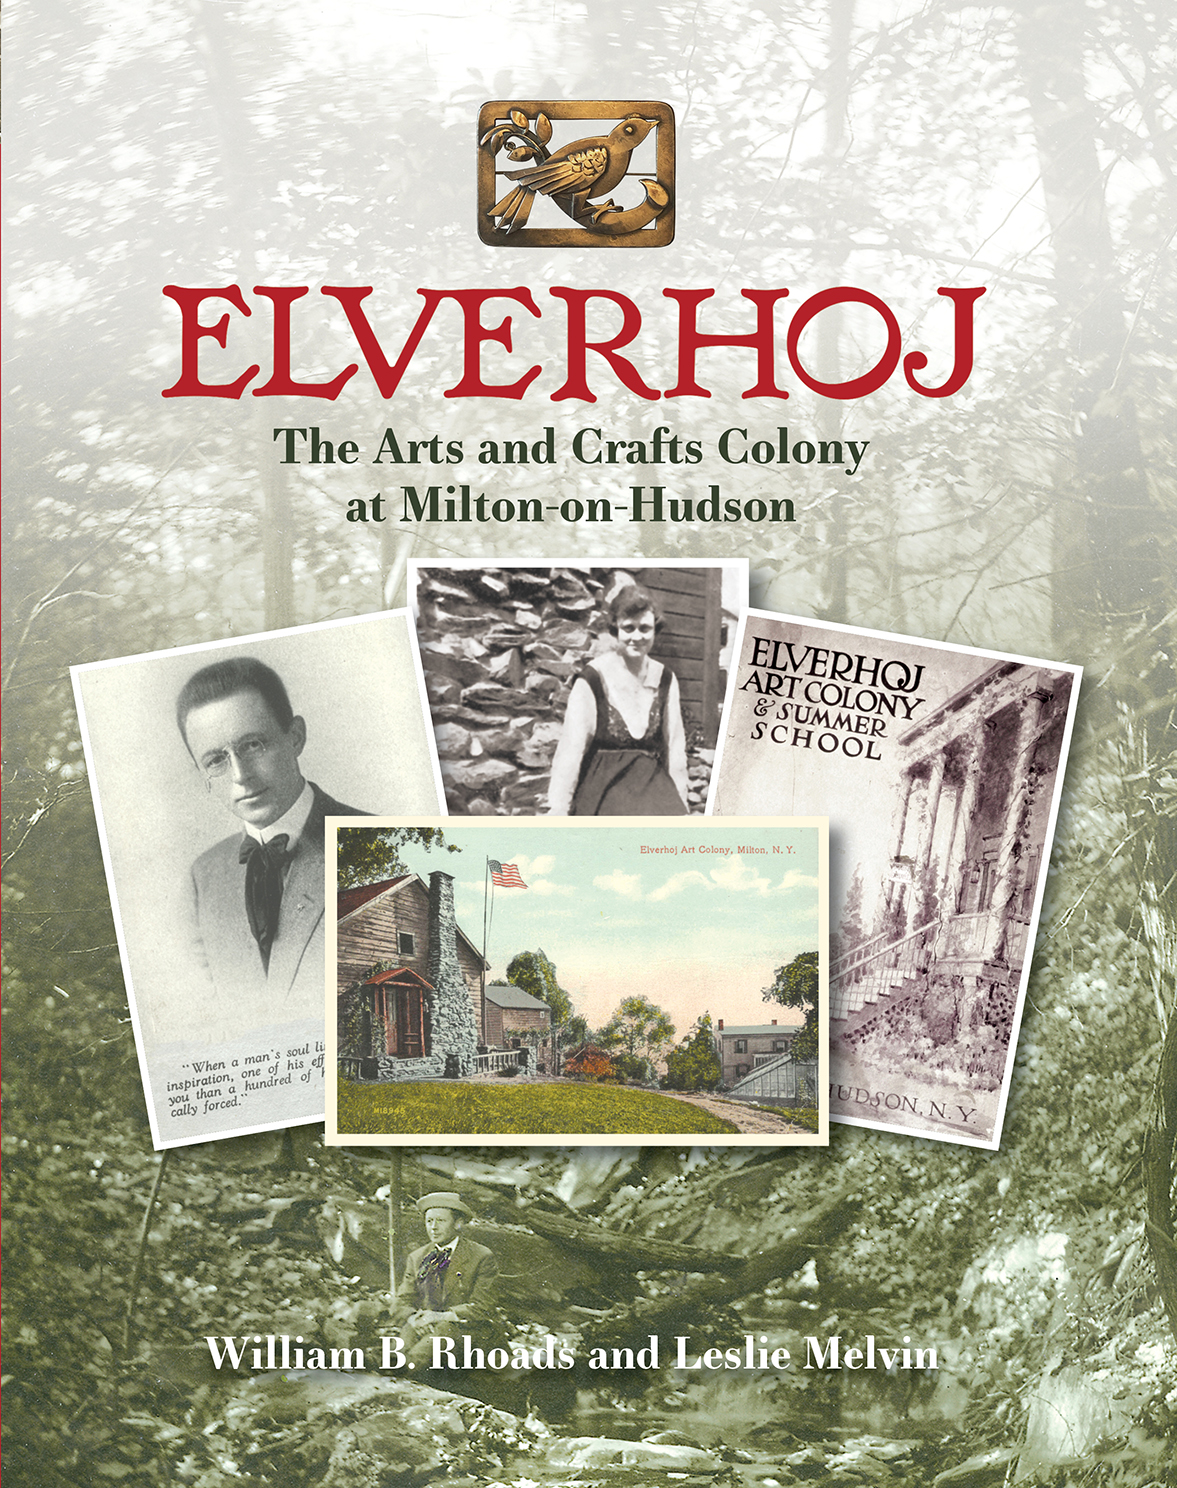 Elverhoj: The Arts and Crafts Colony at Milton-on-Hudson